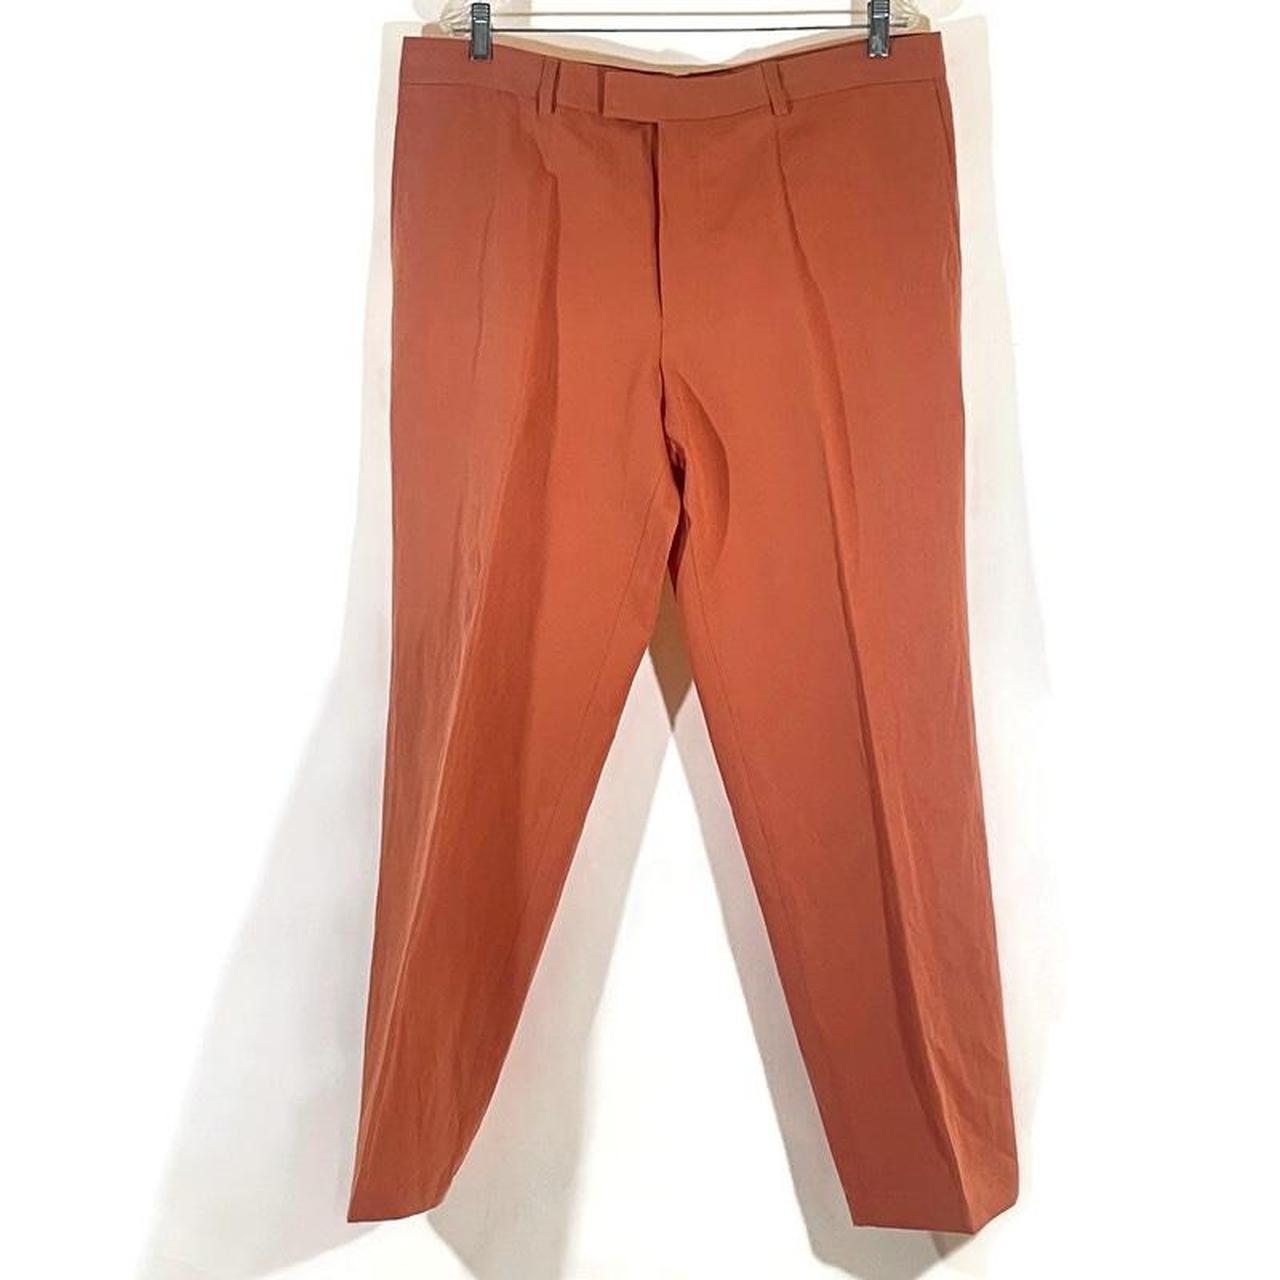 Hugo Boss 'Orange' Men's Schino Slim-Fit Trouser Chino Pants Blue 40x32 NWT  $135 | eBay